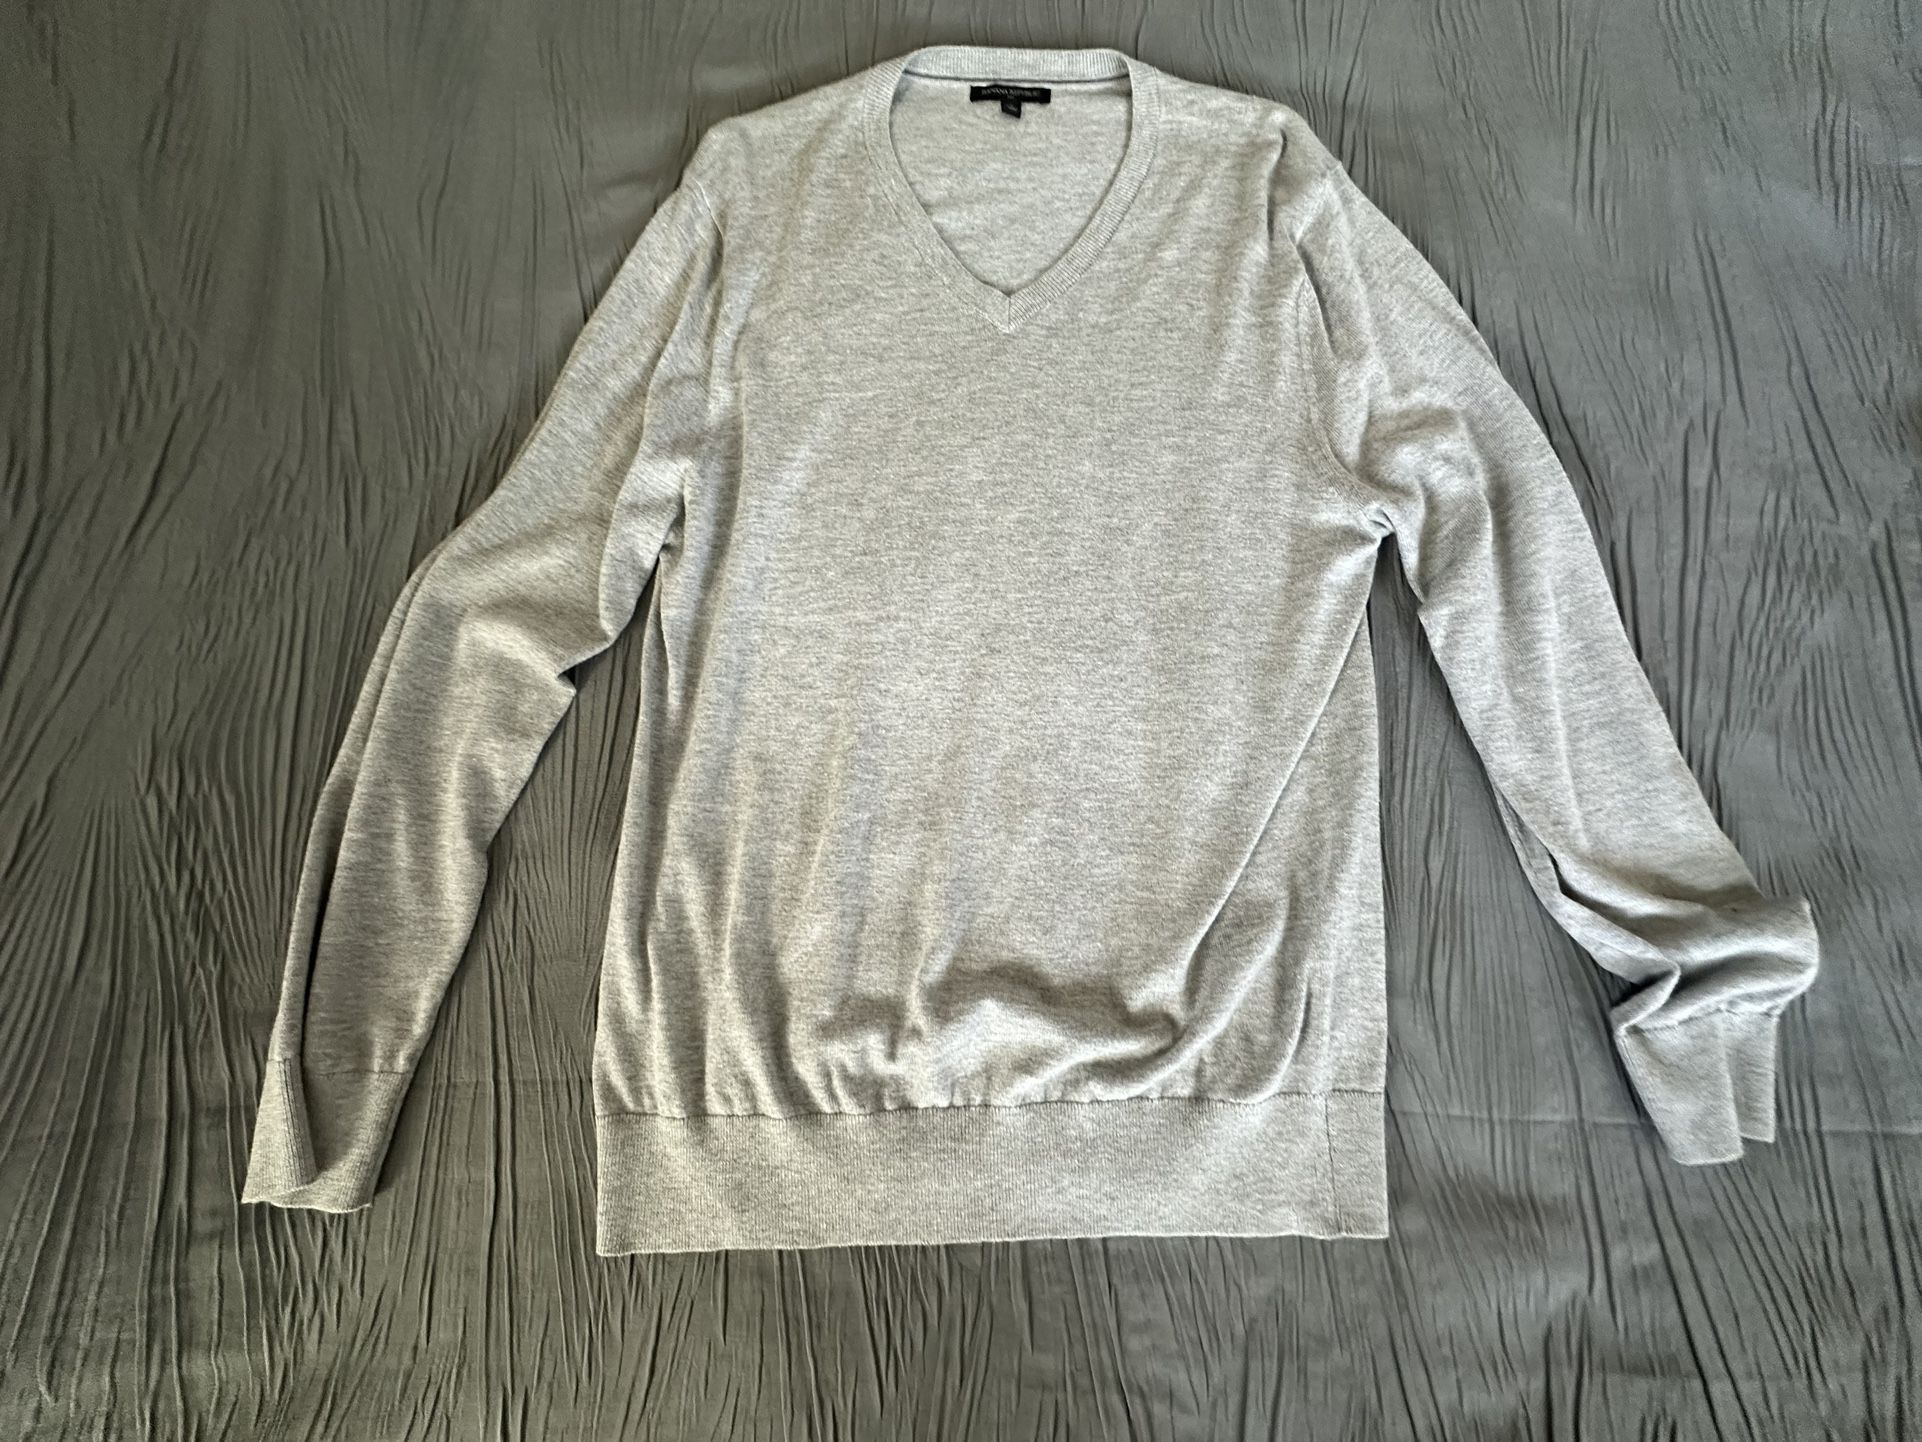 Light Cardigan Sweater - Large